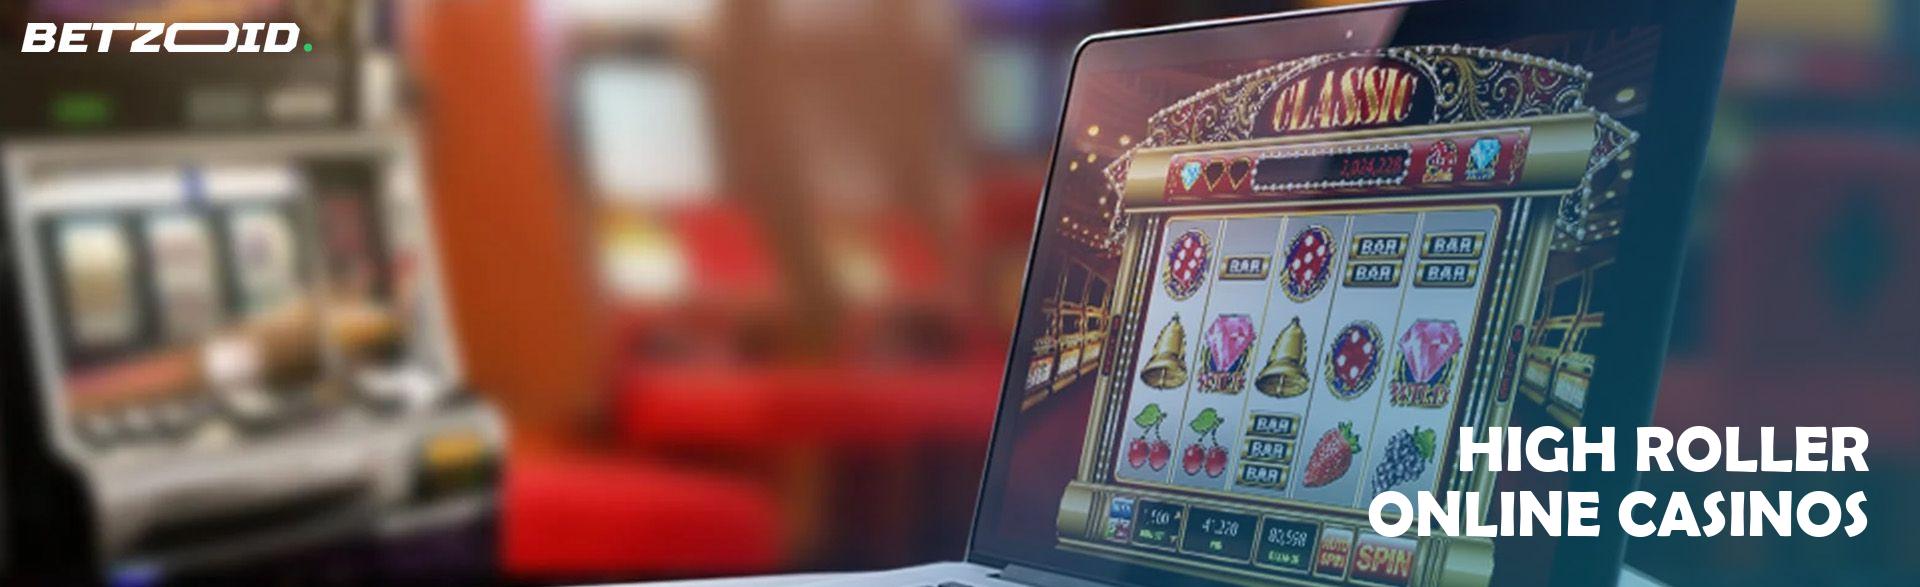 High Roller Online Casinos.